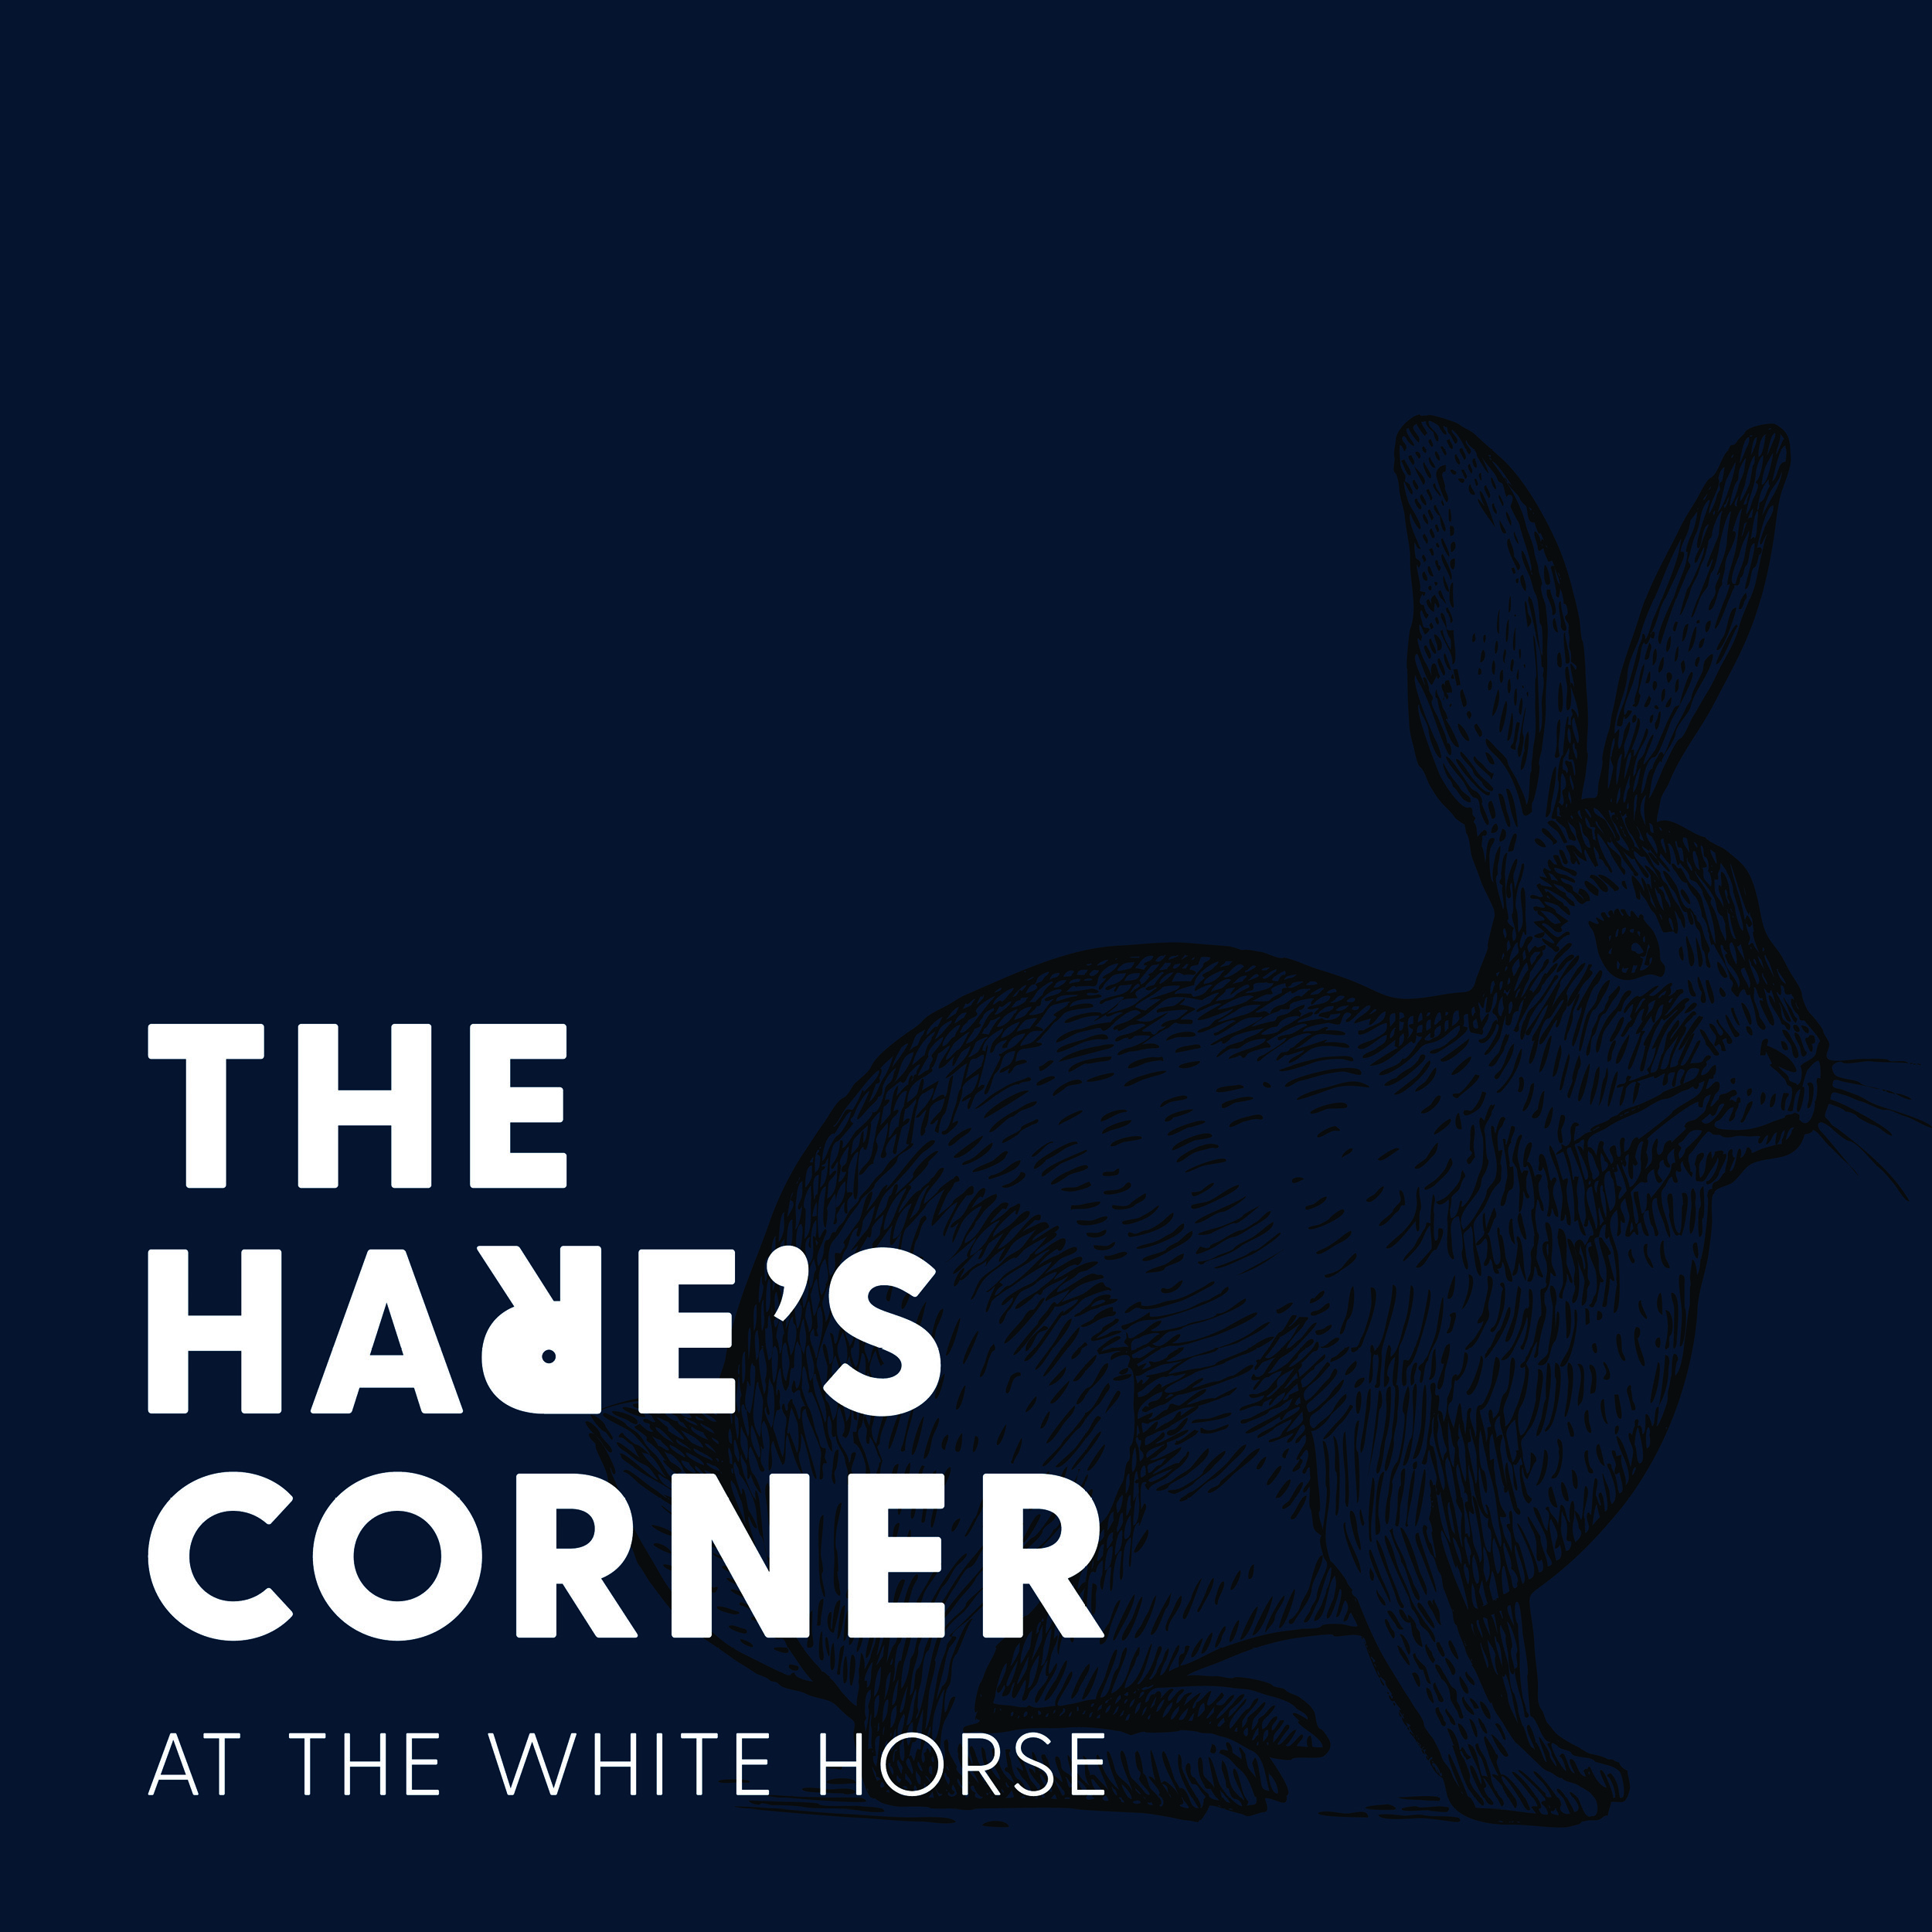 The Hare's Corner